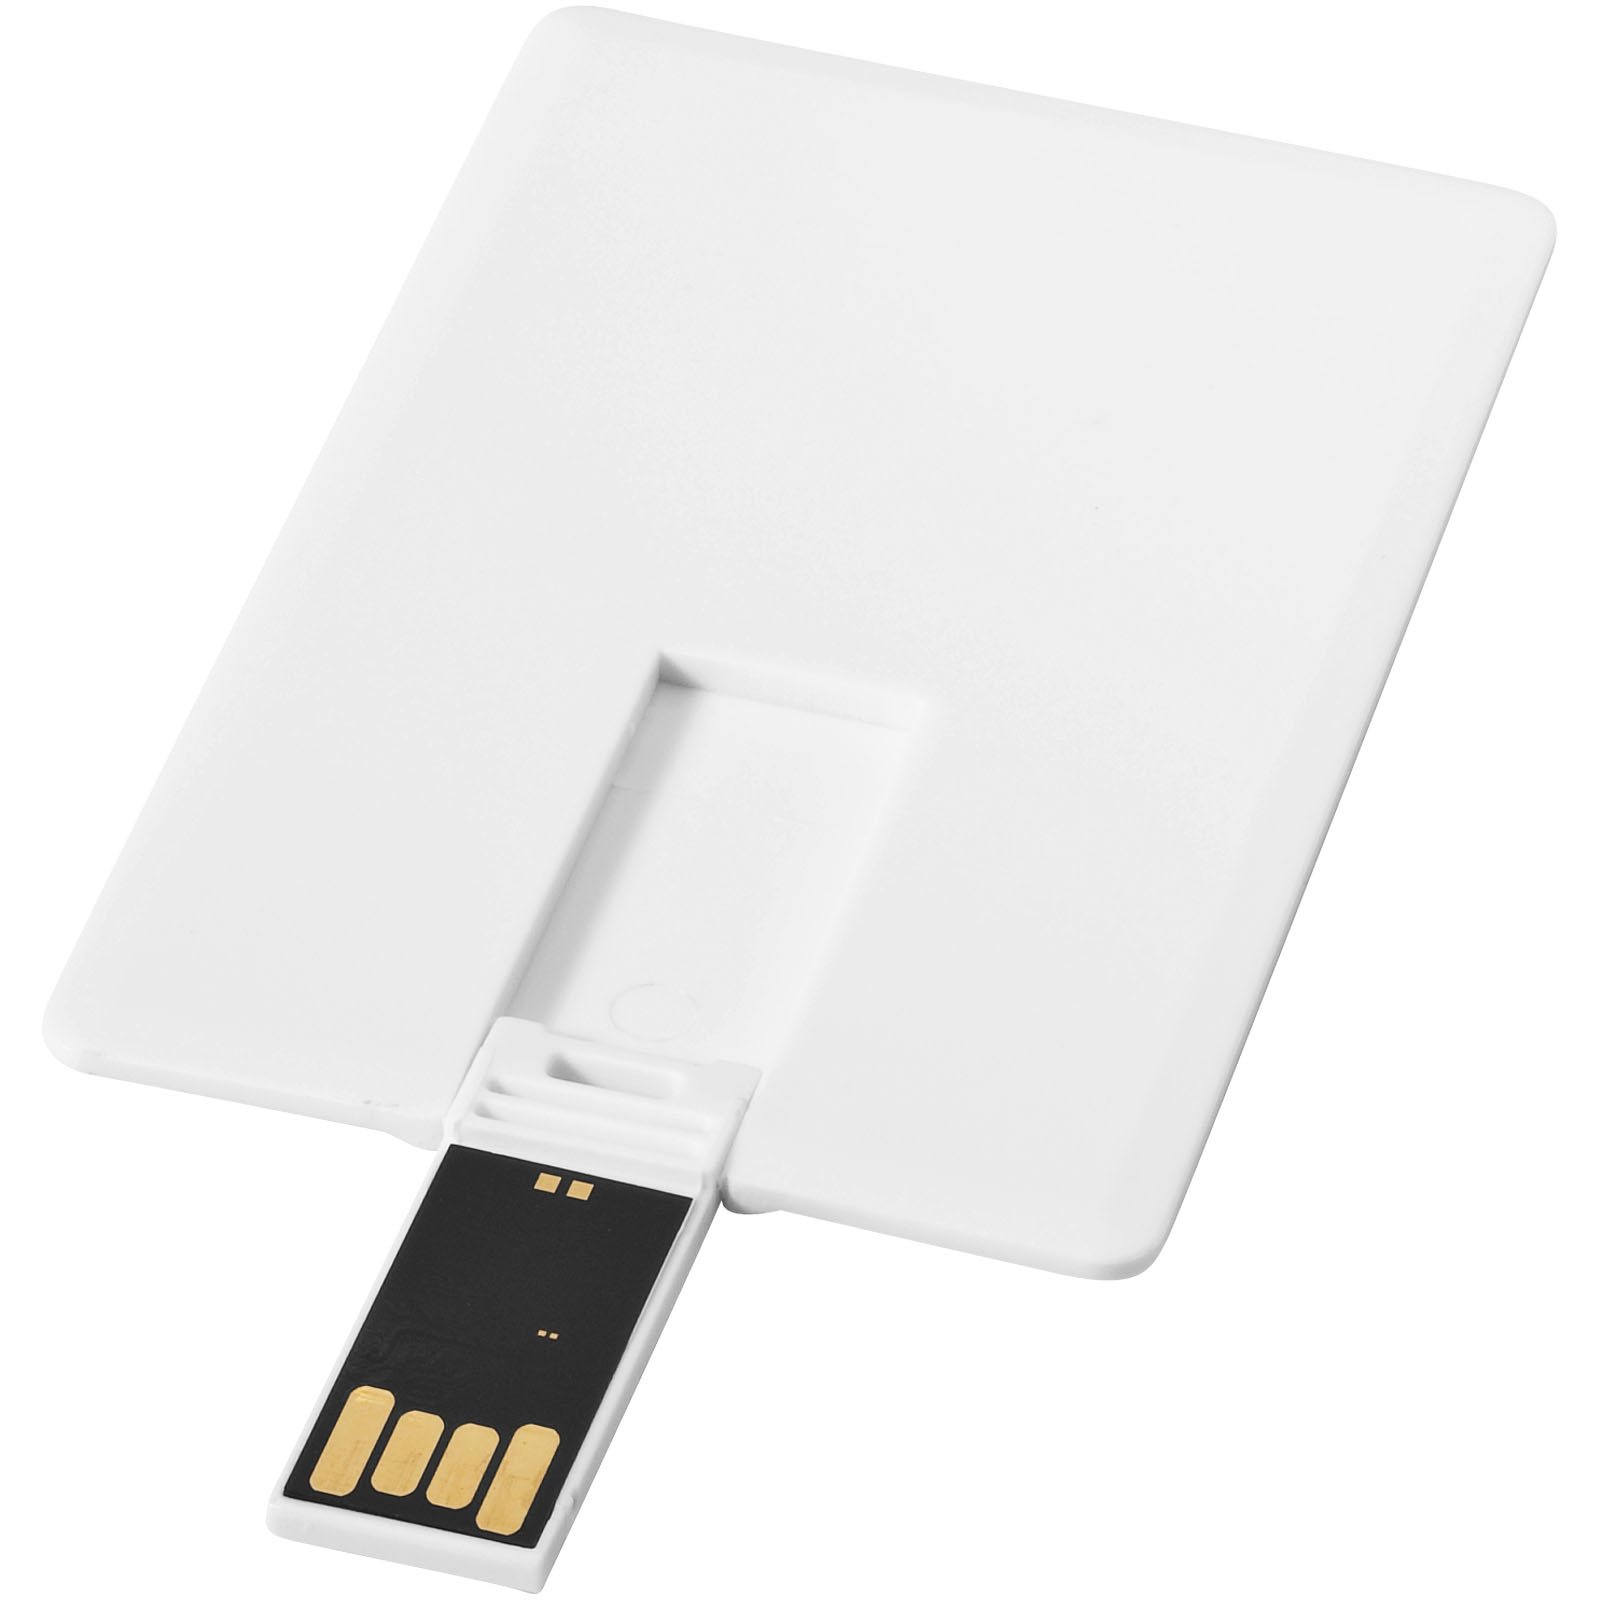 Advertising USB Flash Drives - Slim card-shaped 4GB USB flash drive